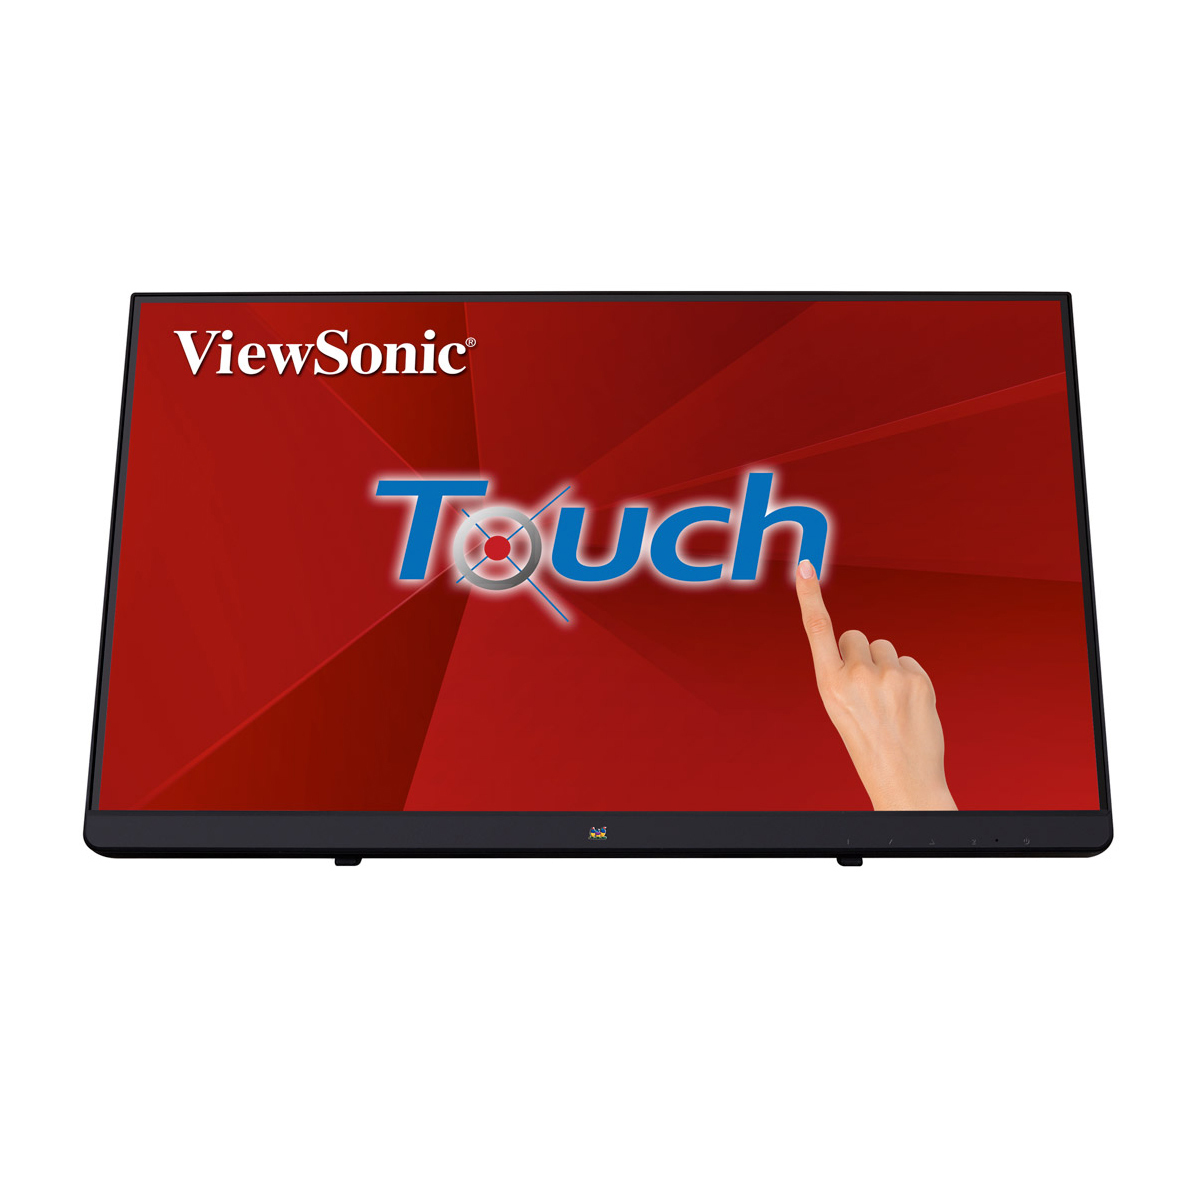 Viewsonic TD2230 Portabler Monitor - 55 cm (21,5 Zoll), Touchscreen, IPS-Panel von Viewsonic